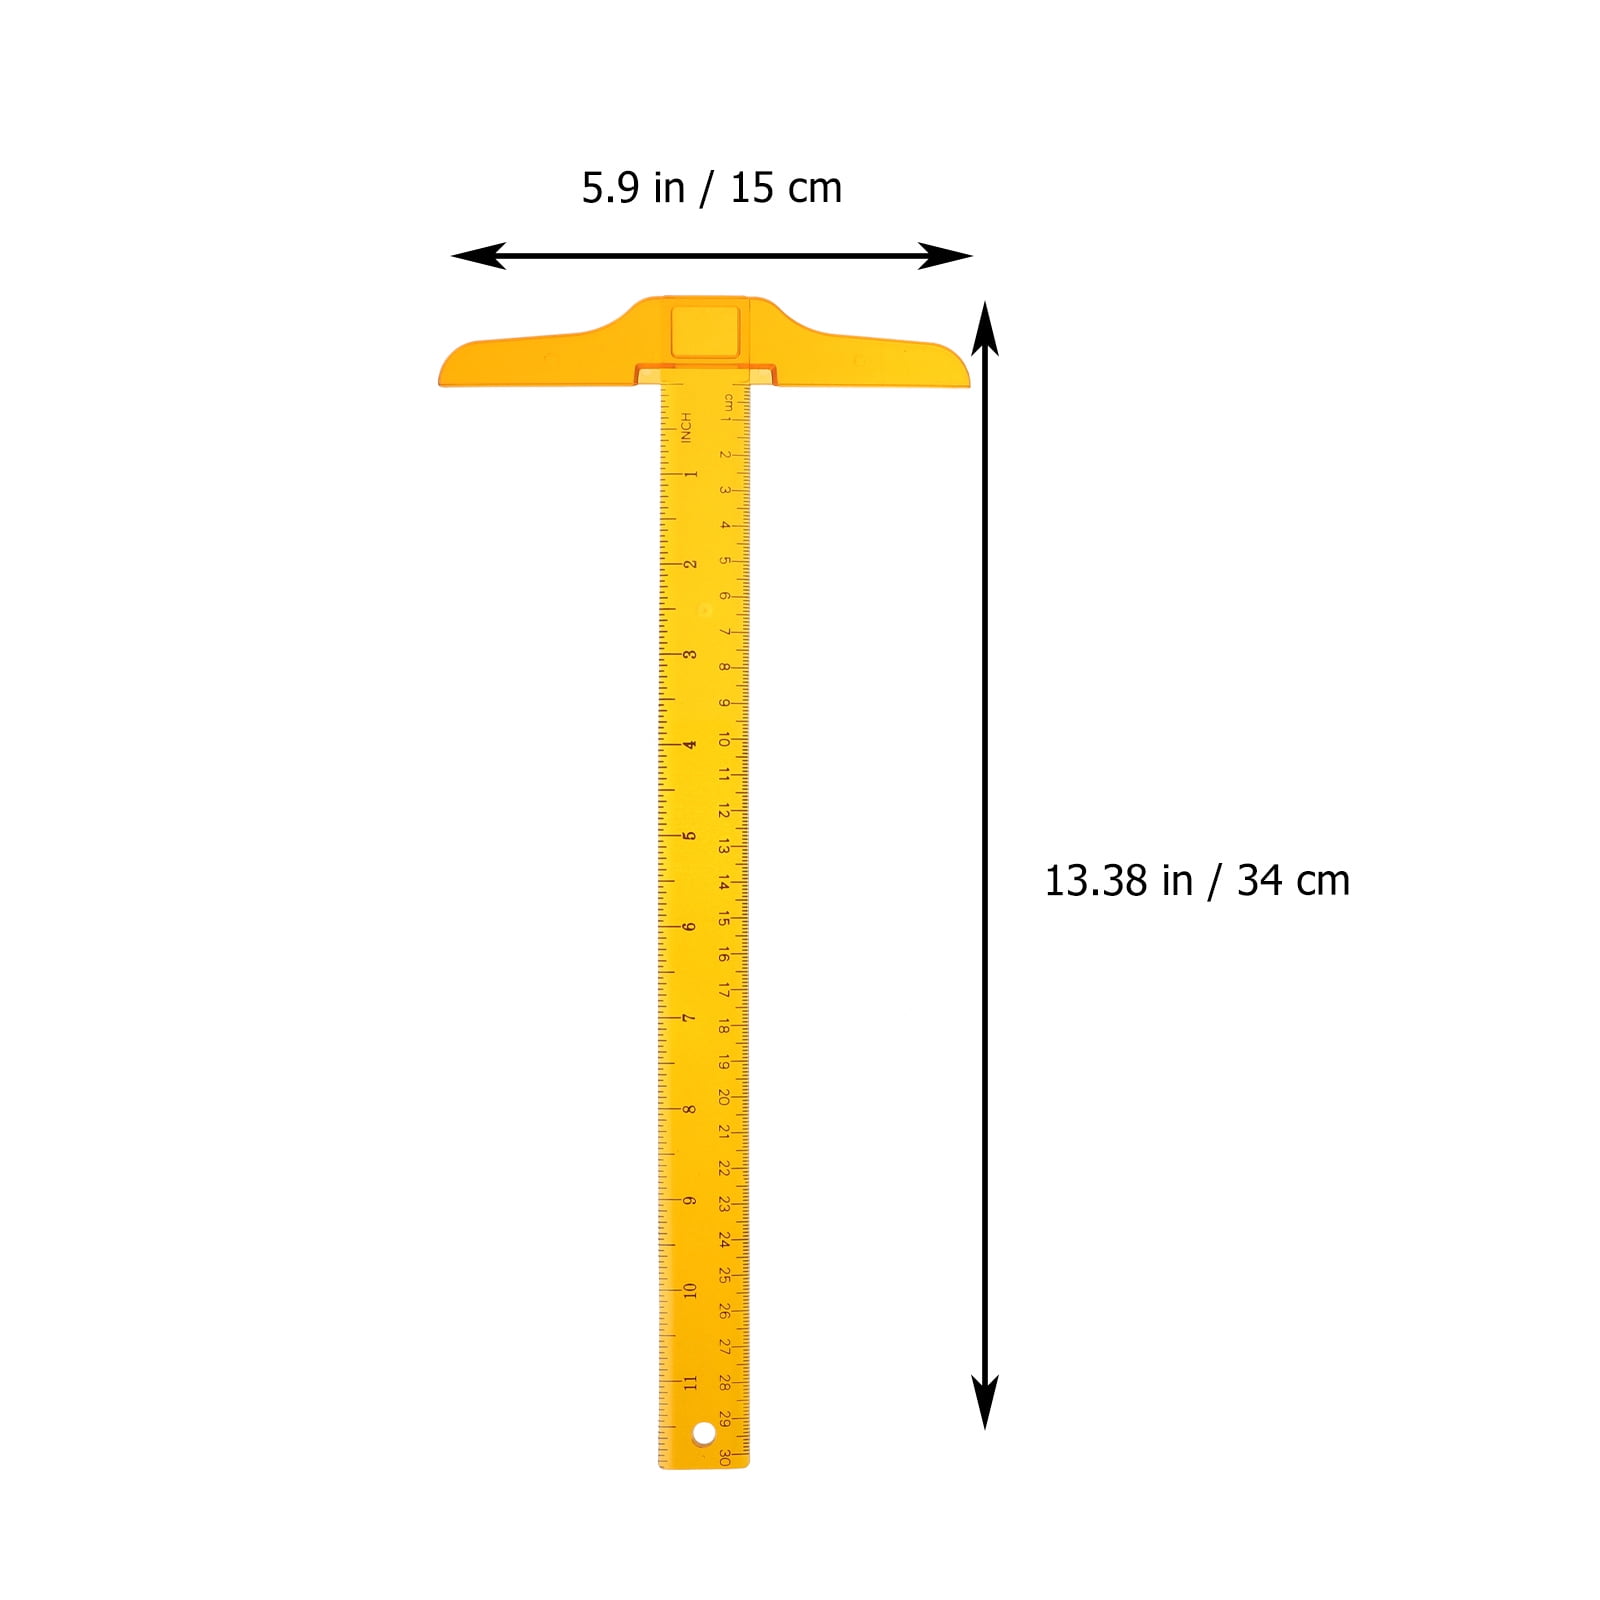 T³ scale ruler & T ruler-The Reformation of Measurement Tool by Yuan Design  Studio — Kickstarter